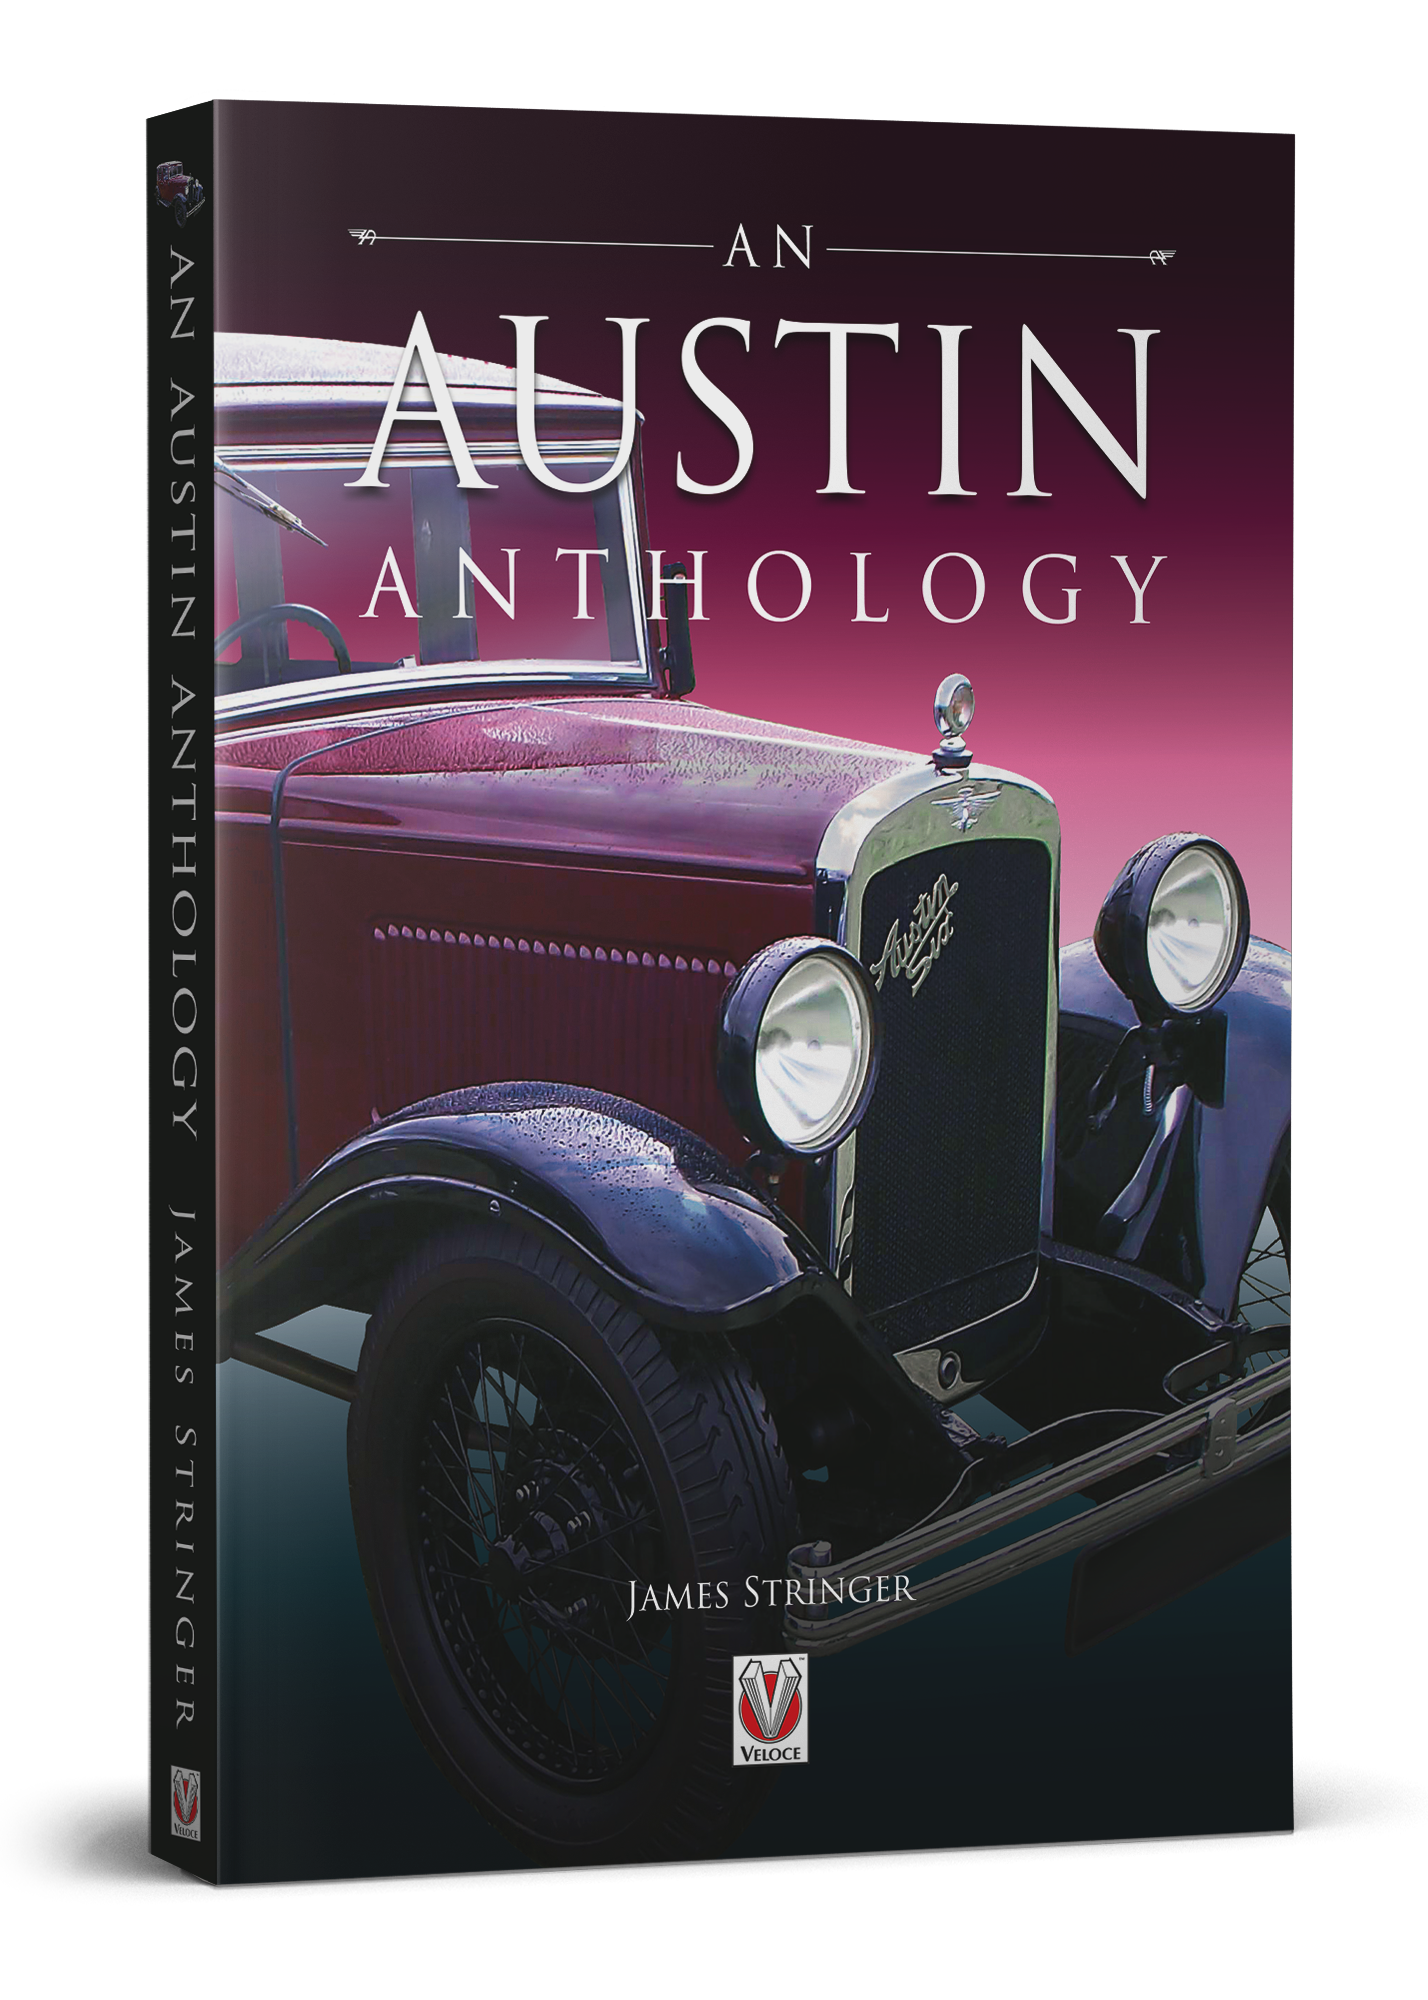 An Austin Anthology by James ‘Jim’ Stringer
